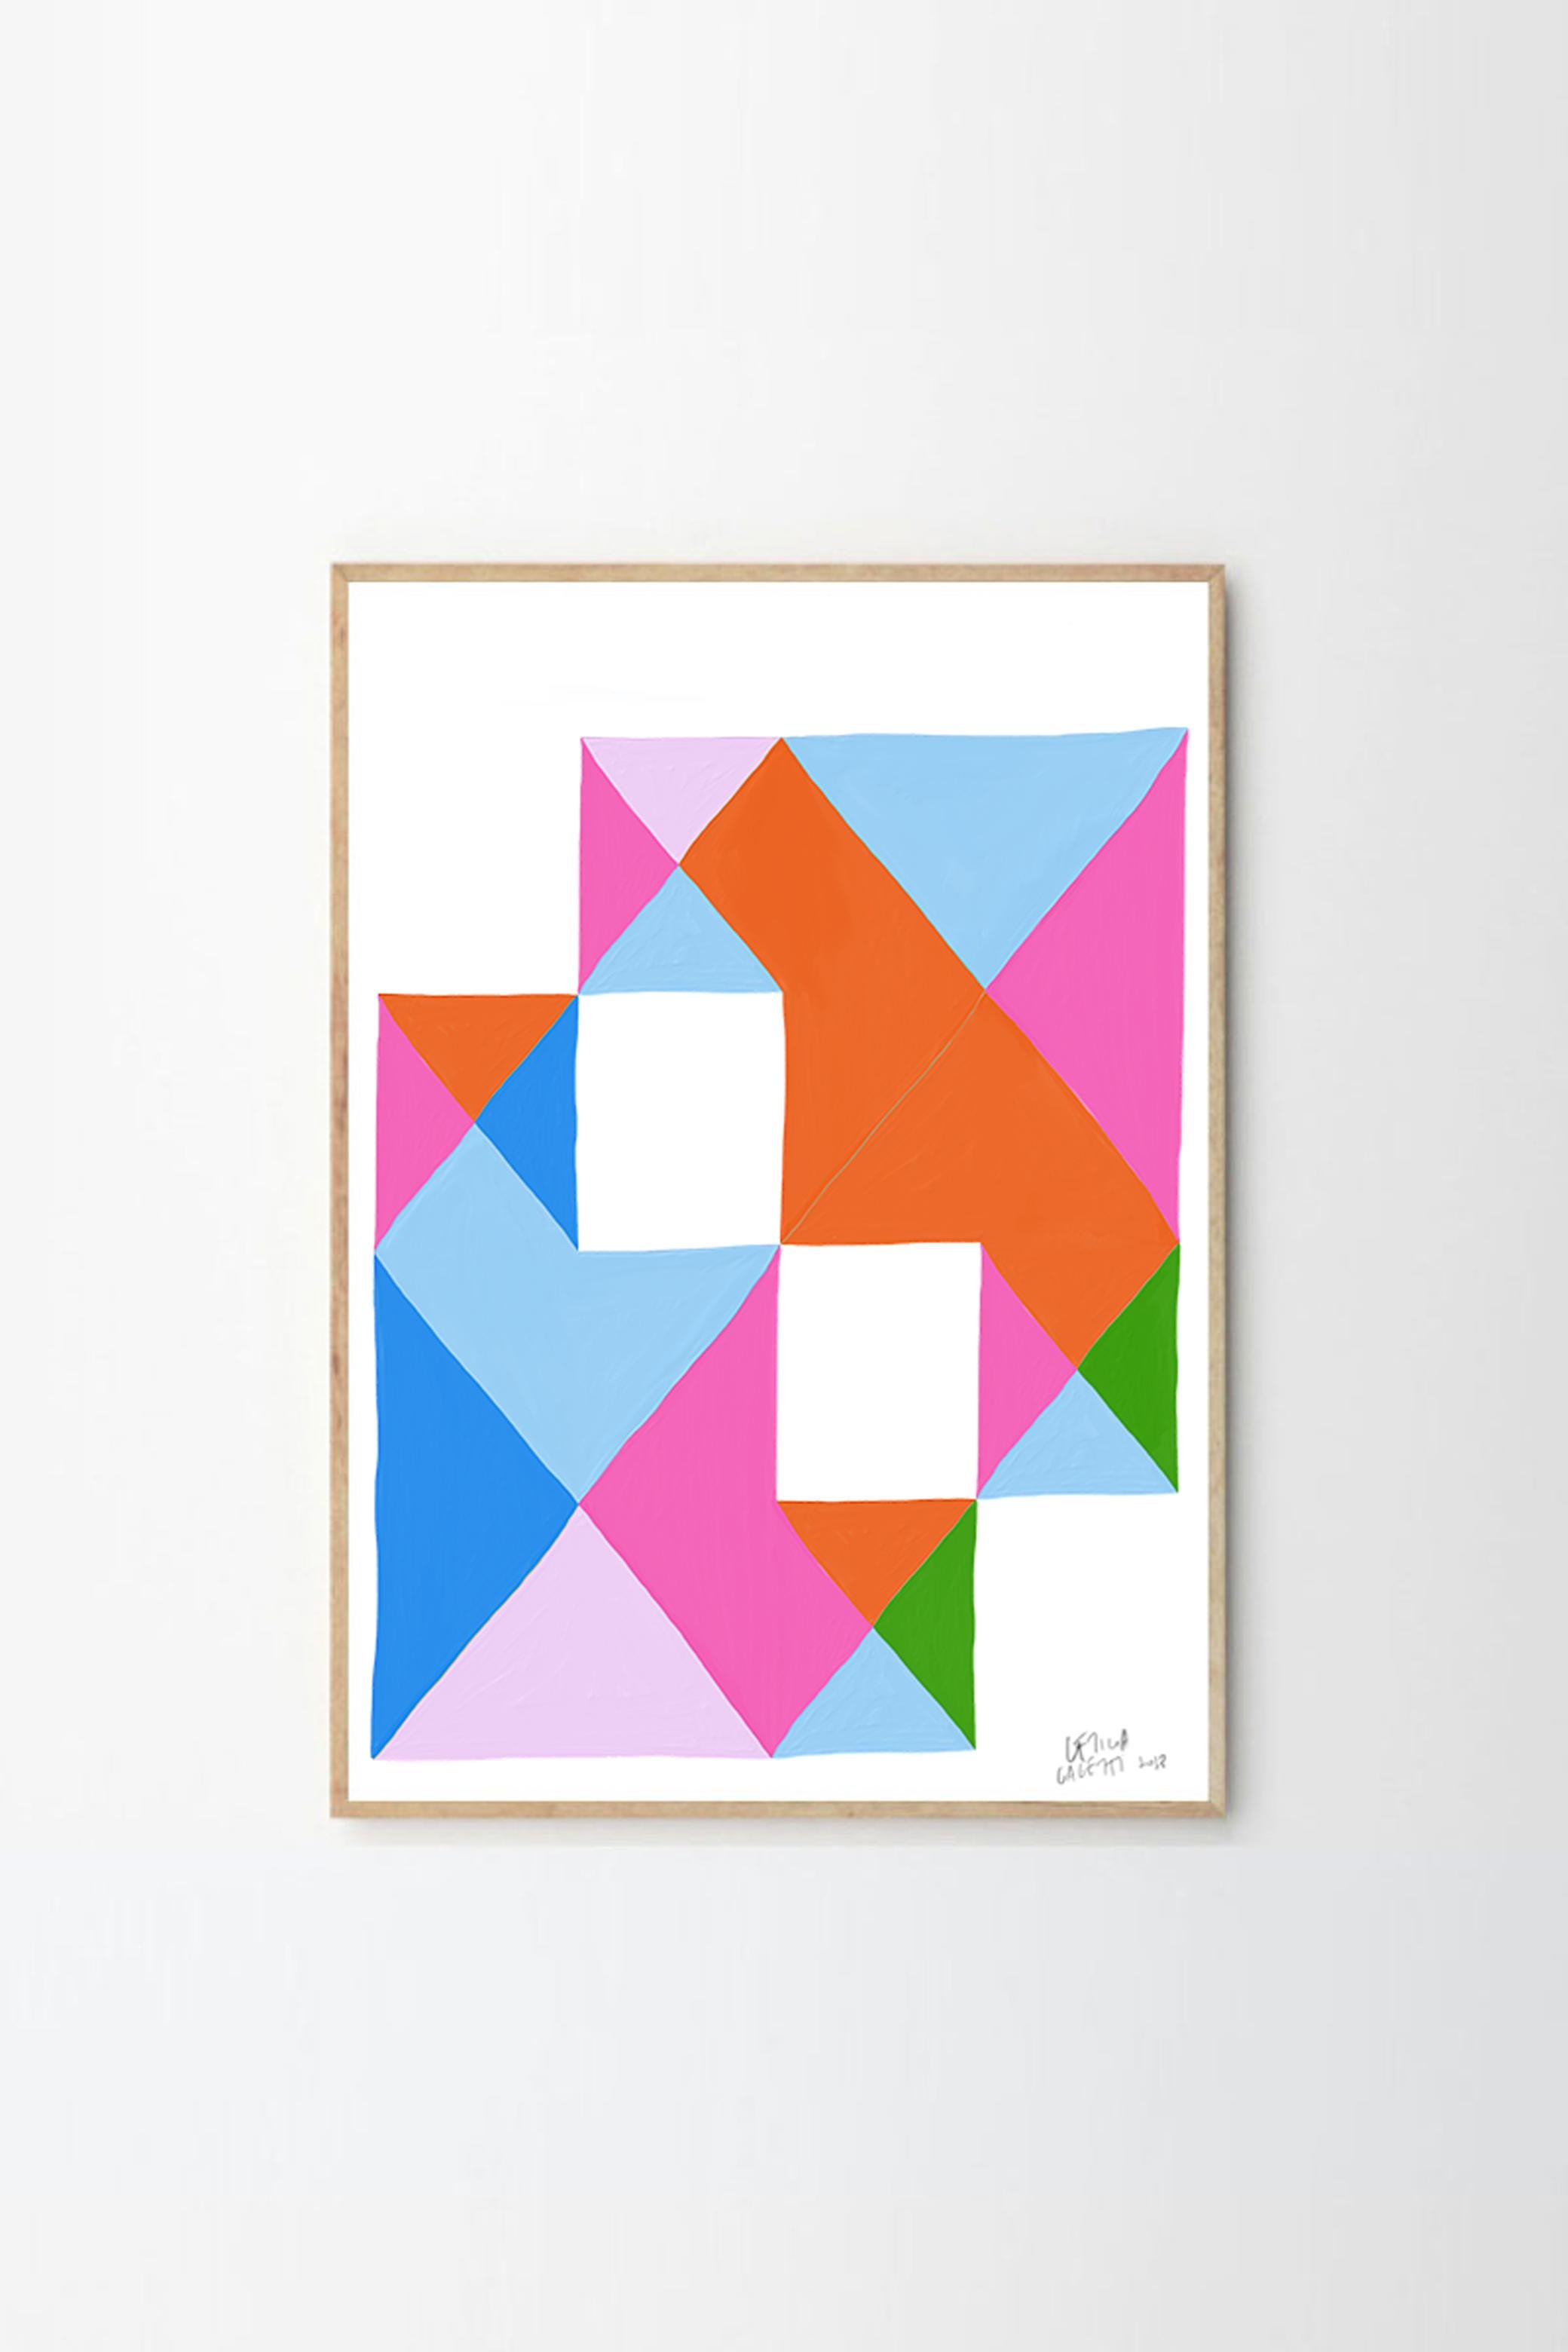 Argentine Estudios Geométricos Modern Art Print by Leticia Gagetti #01 - Multiple Sizes For Sale